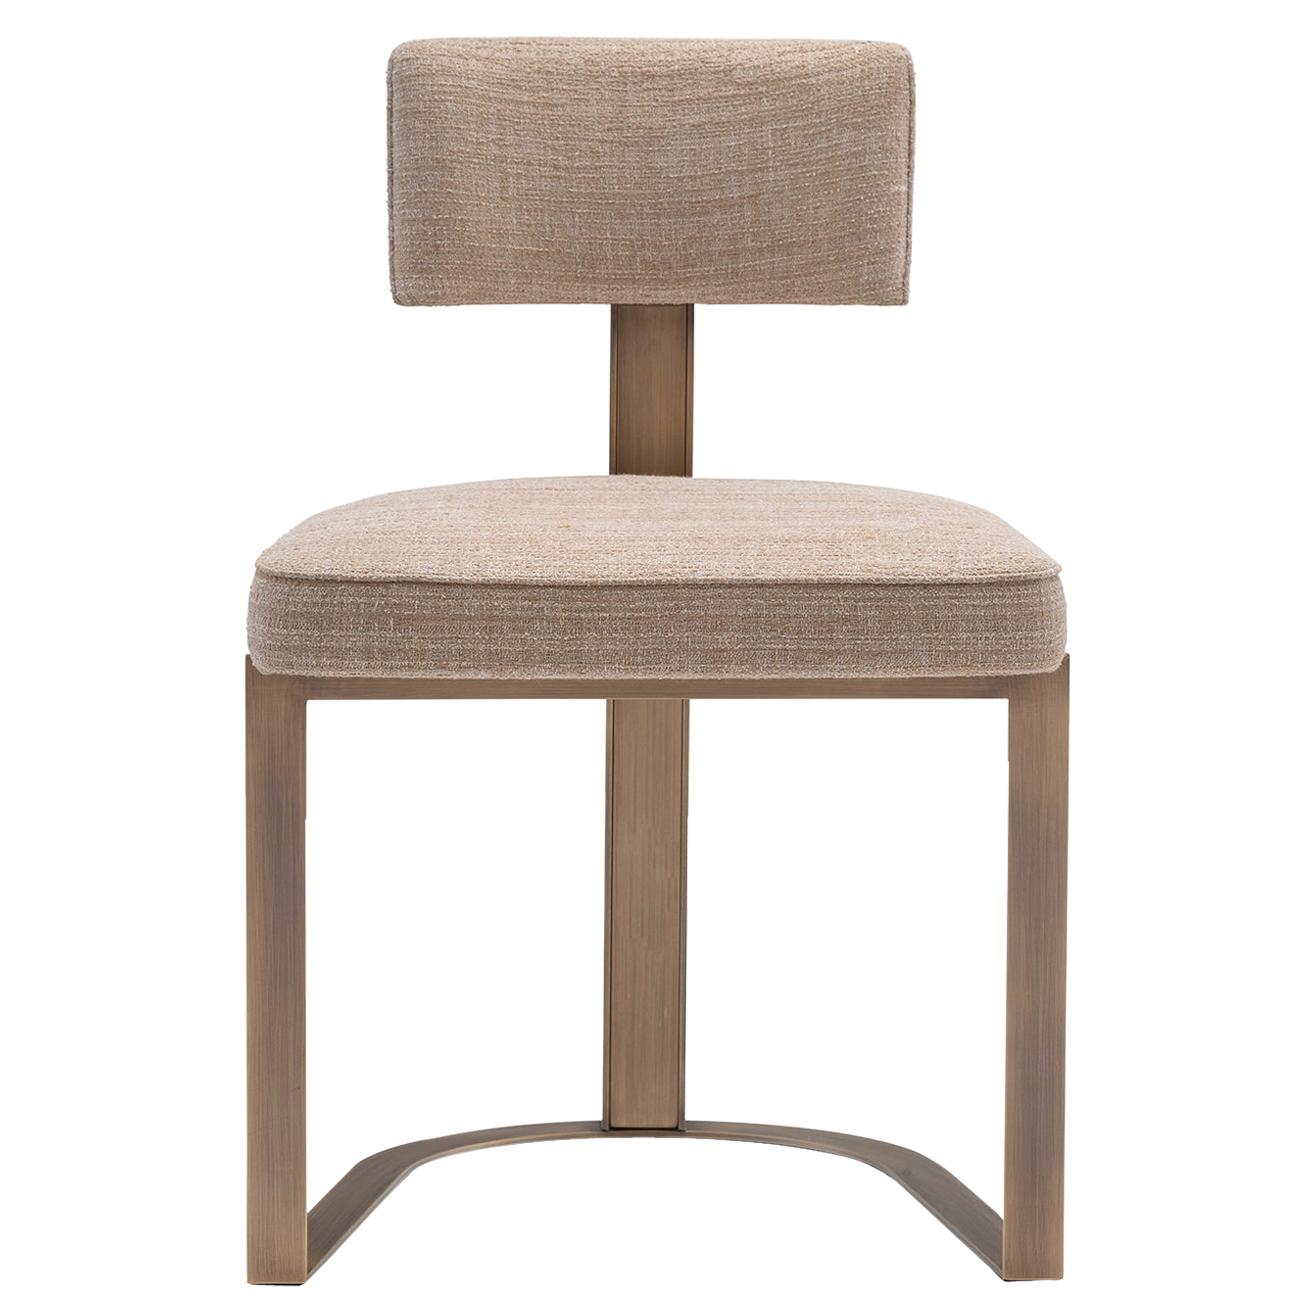 Sveva Chair in Corno Italiano with gloss finish and Burnished Metal, Mod. 6042B